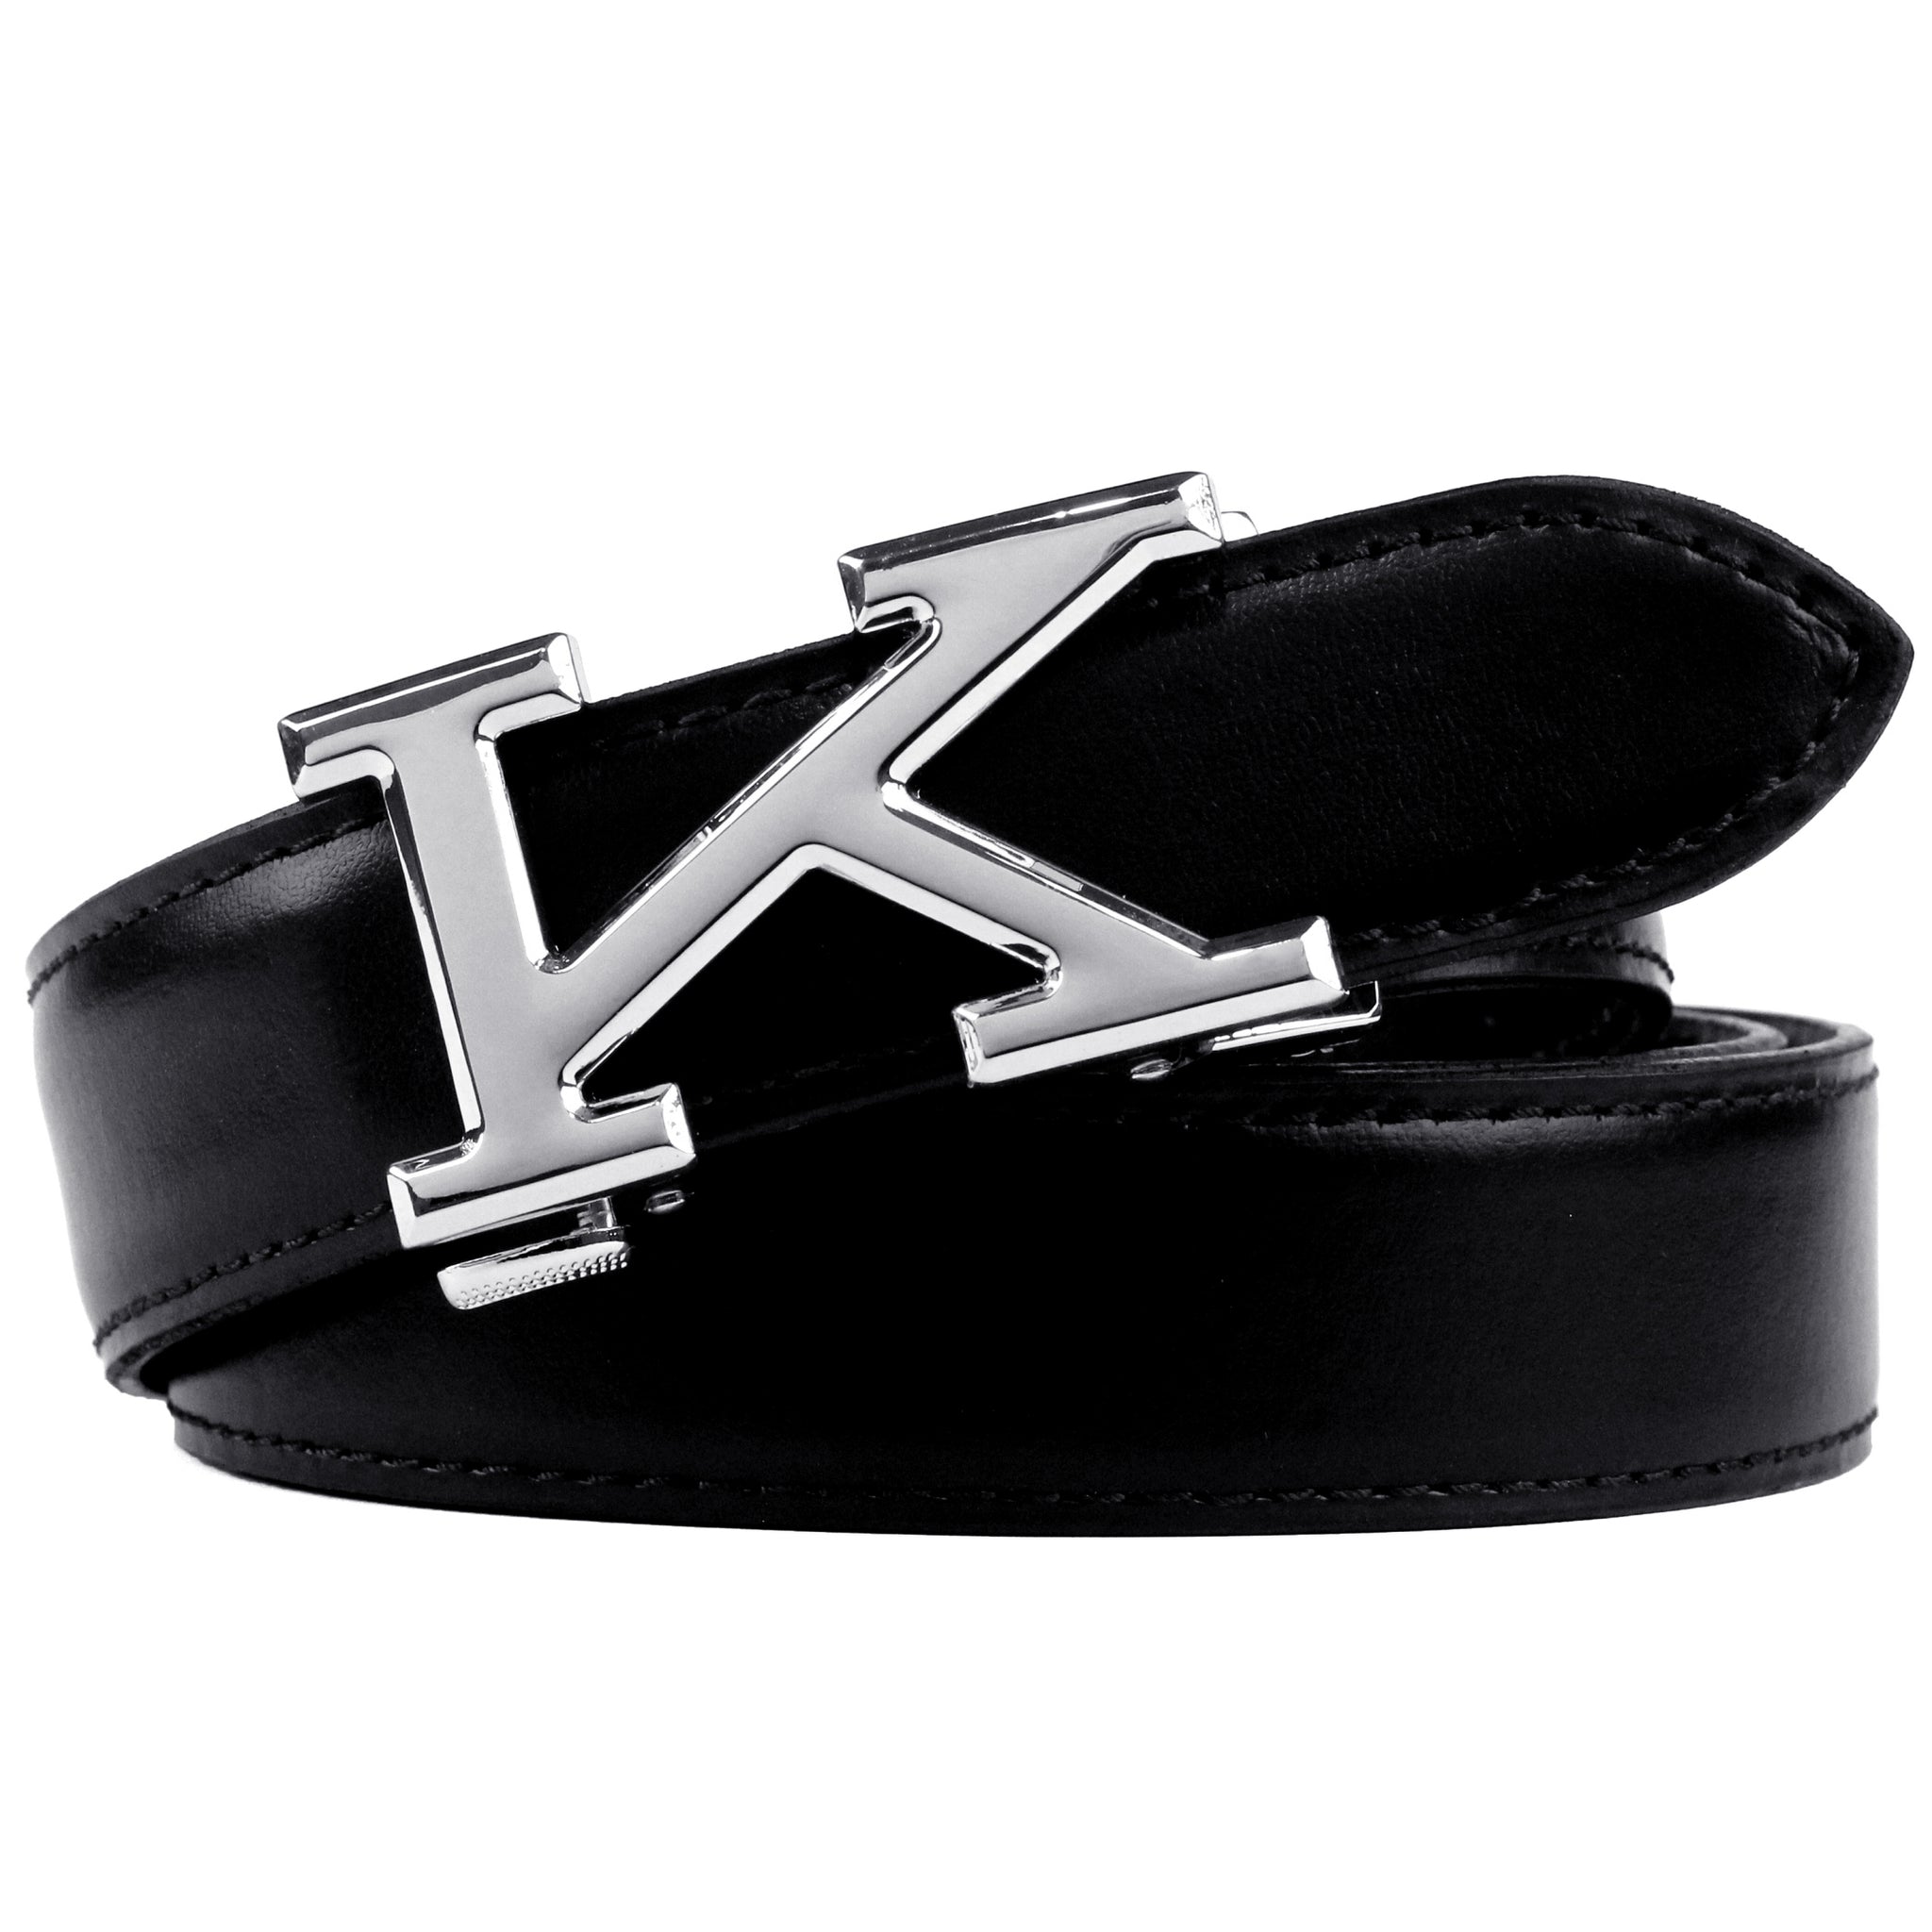 Hemener Men K Letter Metal Buckle Black Genuine Leather Belt